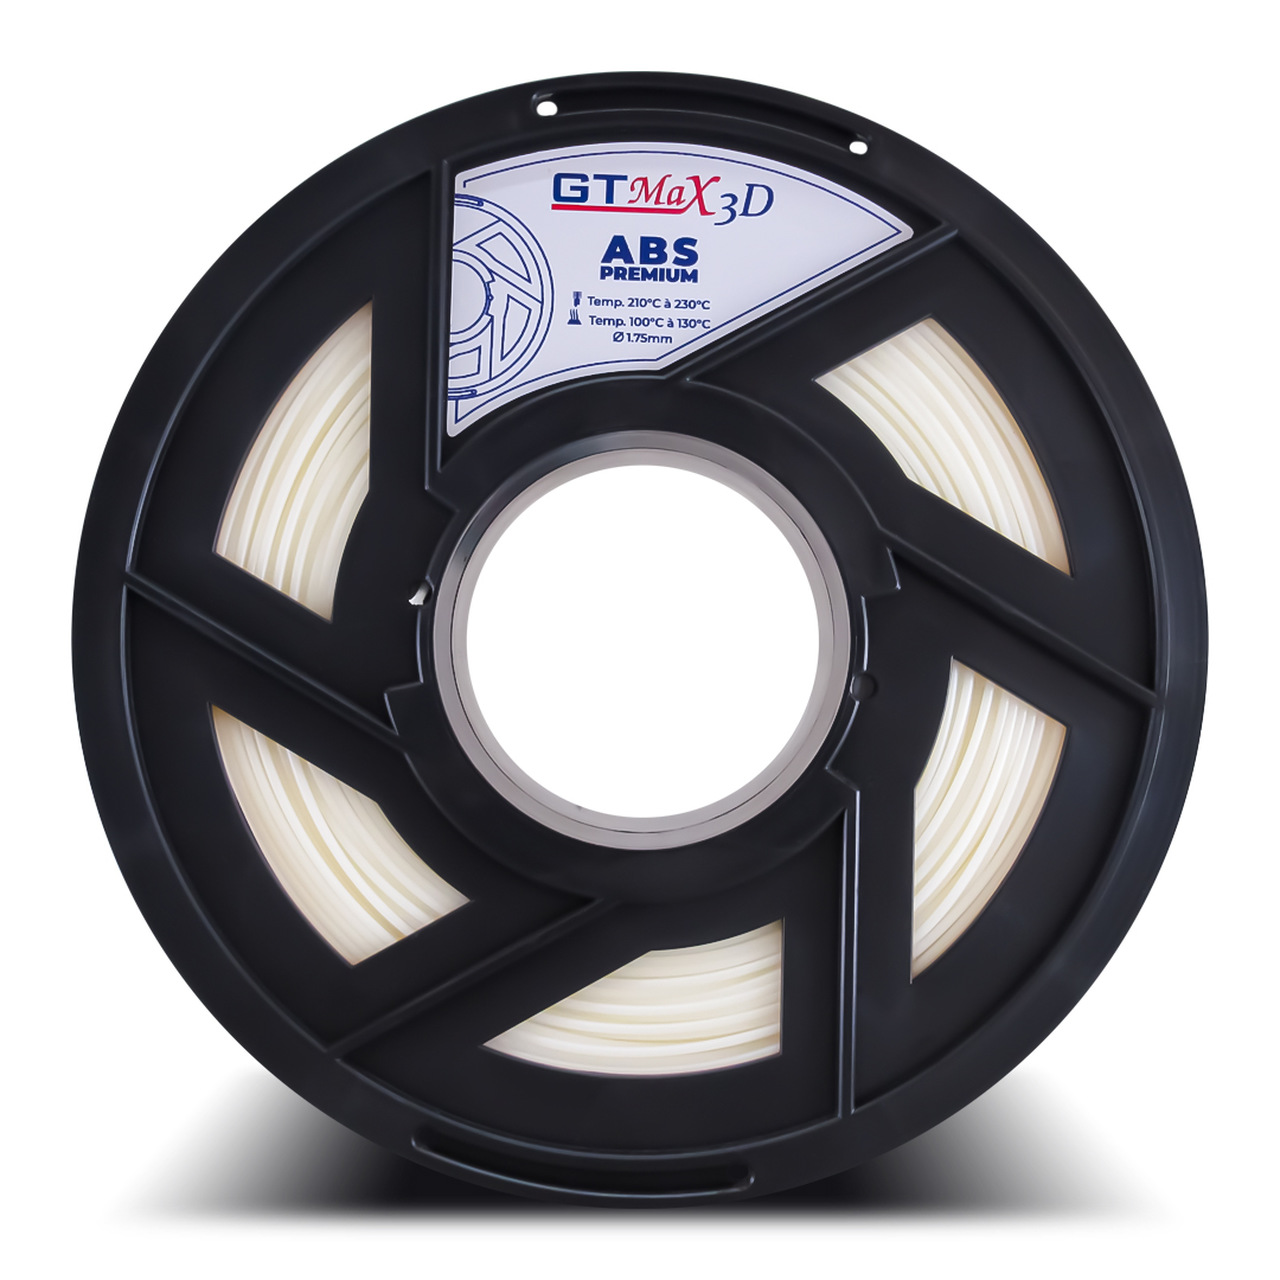 Filamento ABS - Natural - Premium - GTMax 3D - 1.75mm - 1KG